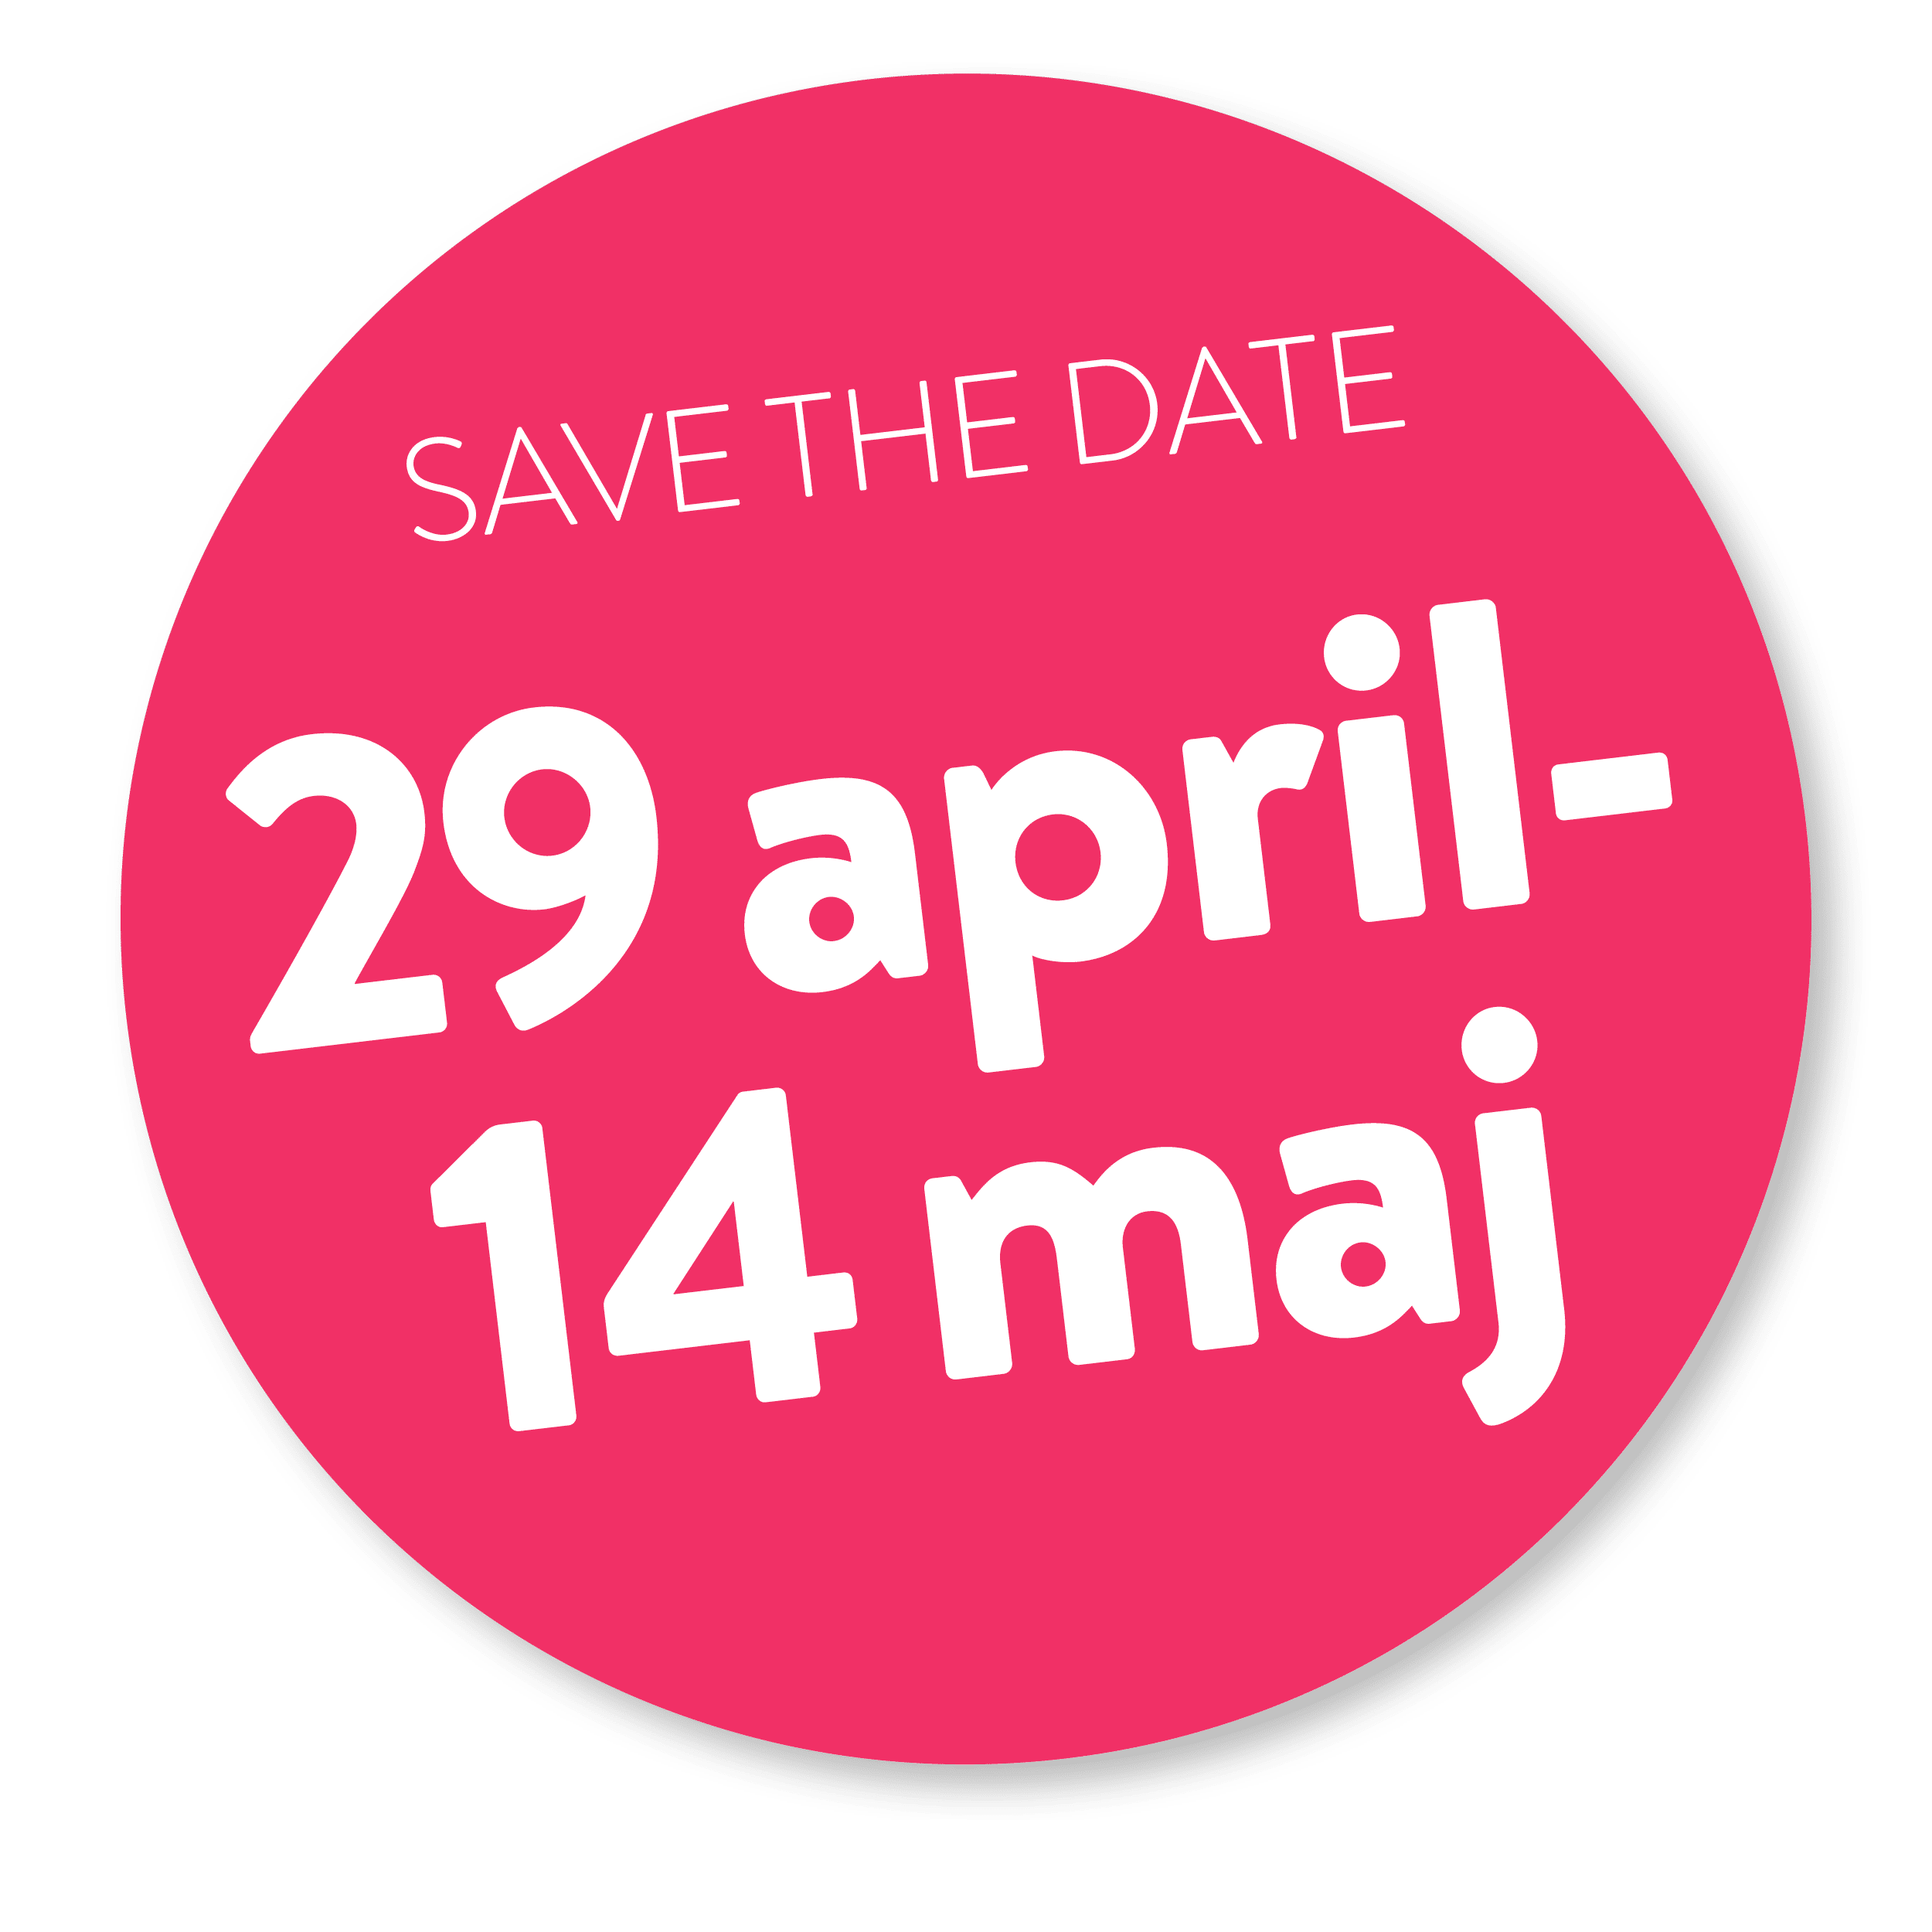 save the date 29 apr - 14 maj